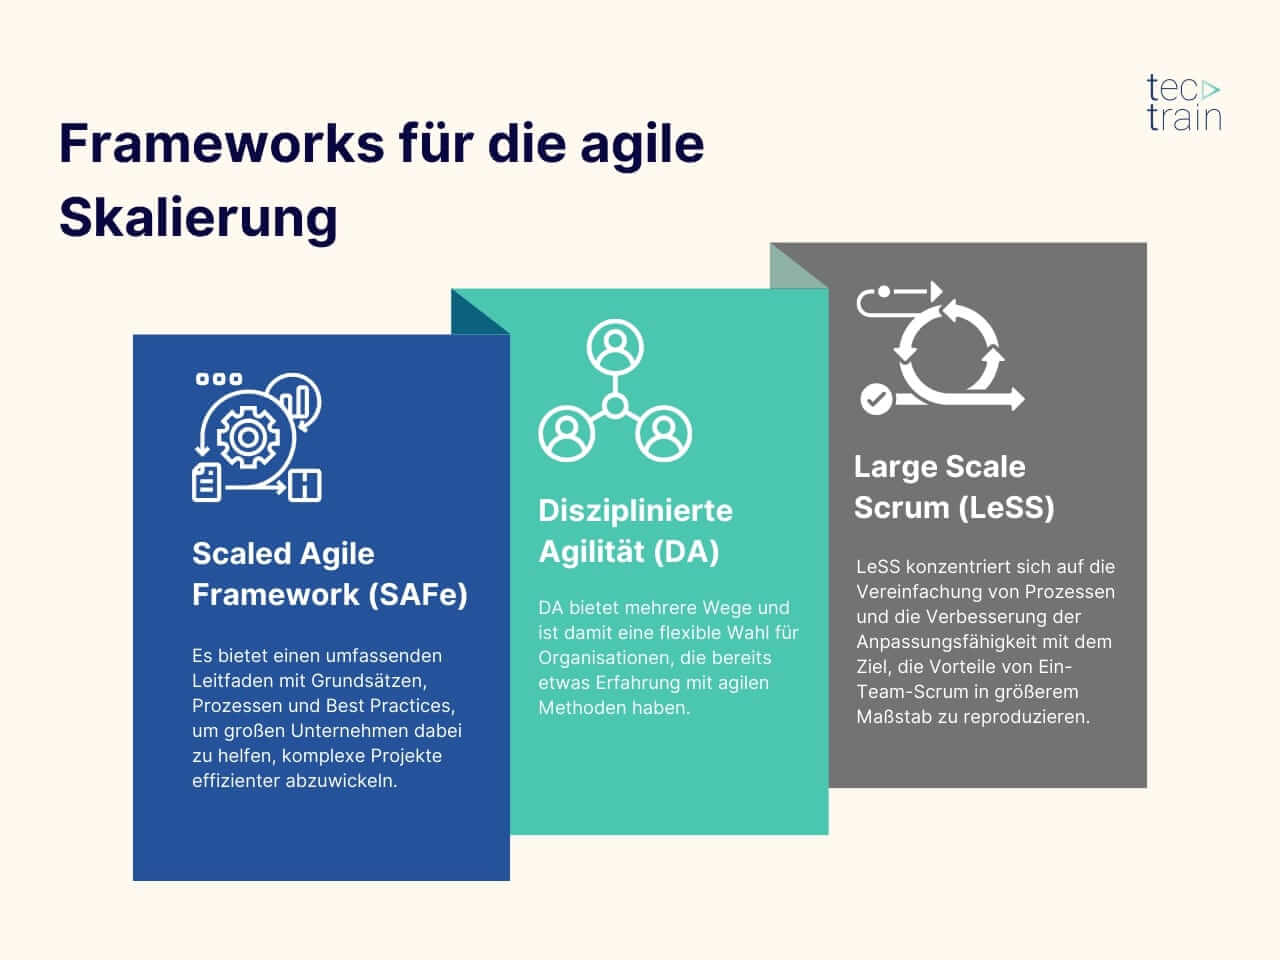 Frameworks zur Skalierung von Agile (Scaled Agile Framework - SAFe, Diszipliniertes Agile - DA, Large Scale Scrum - LeSS)